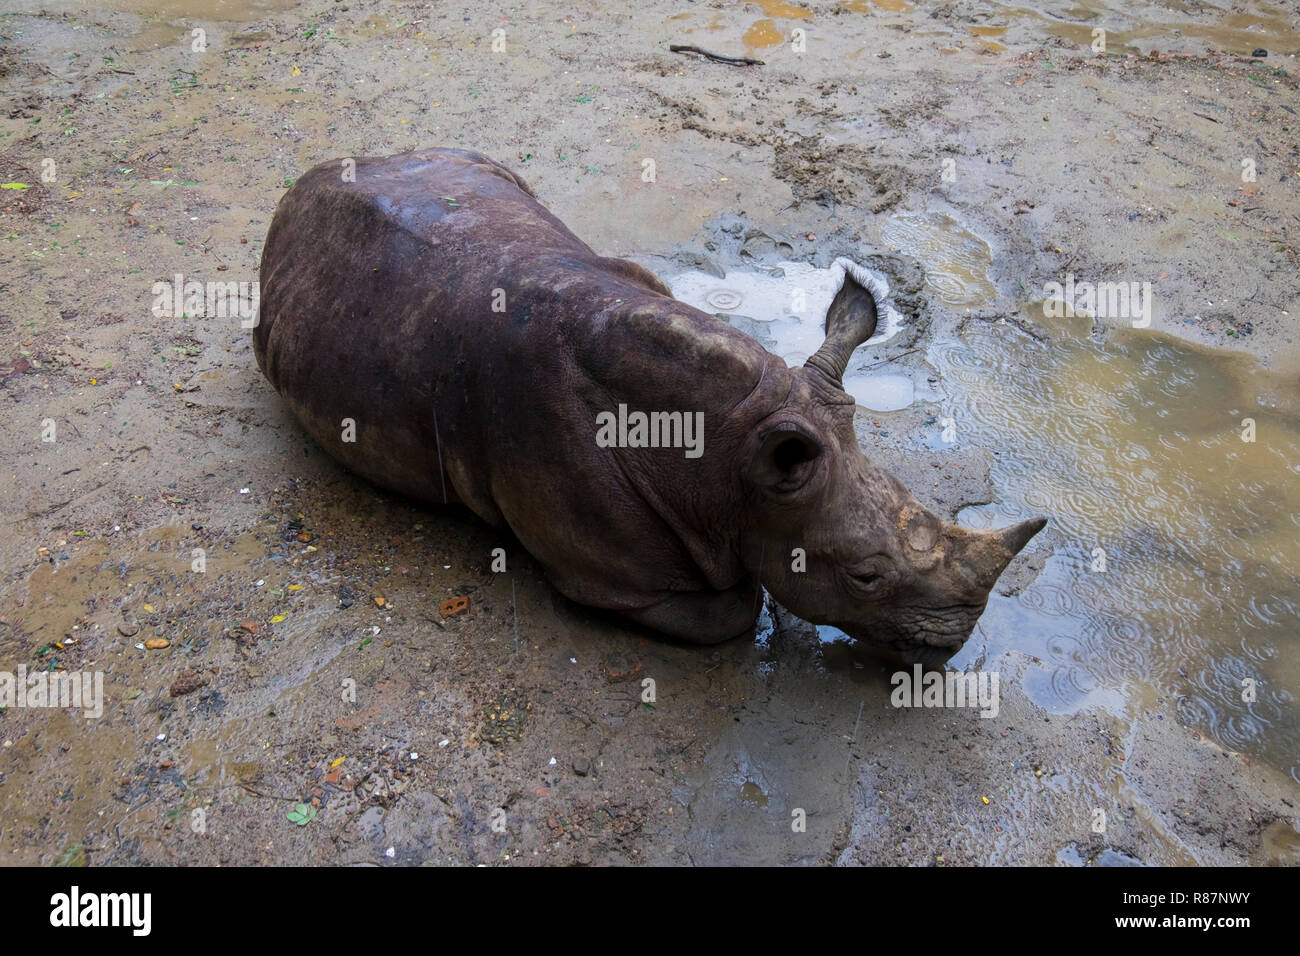 A rhinoceros at the zoo in Yangon, Myanmar. Stock Photo